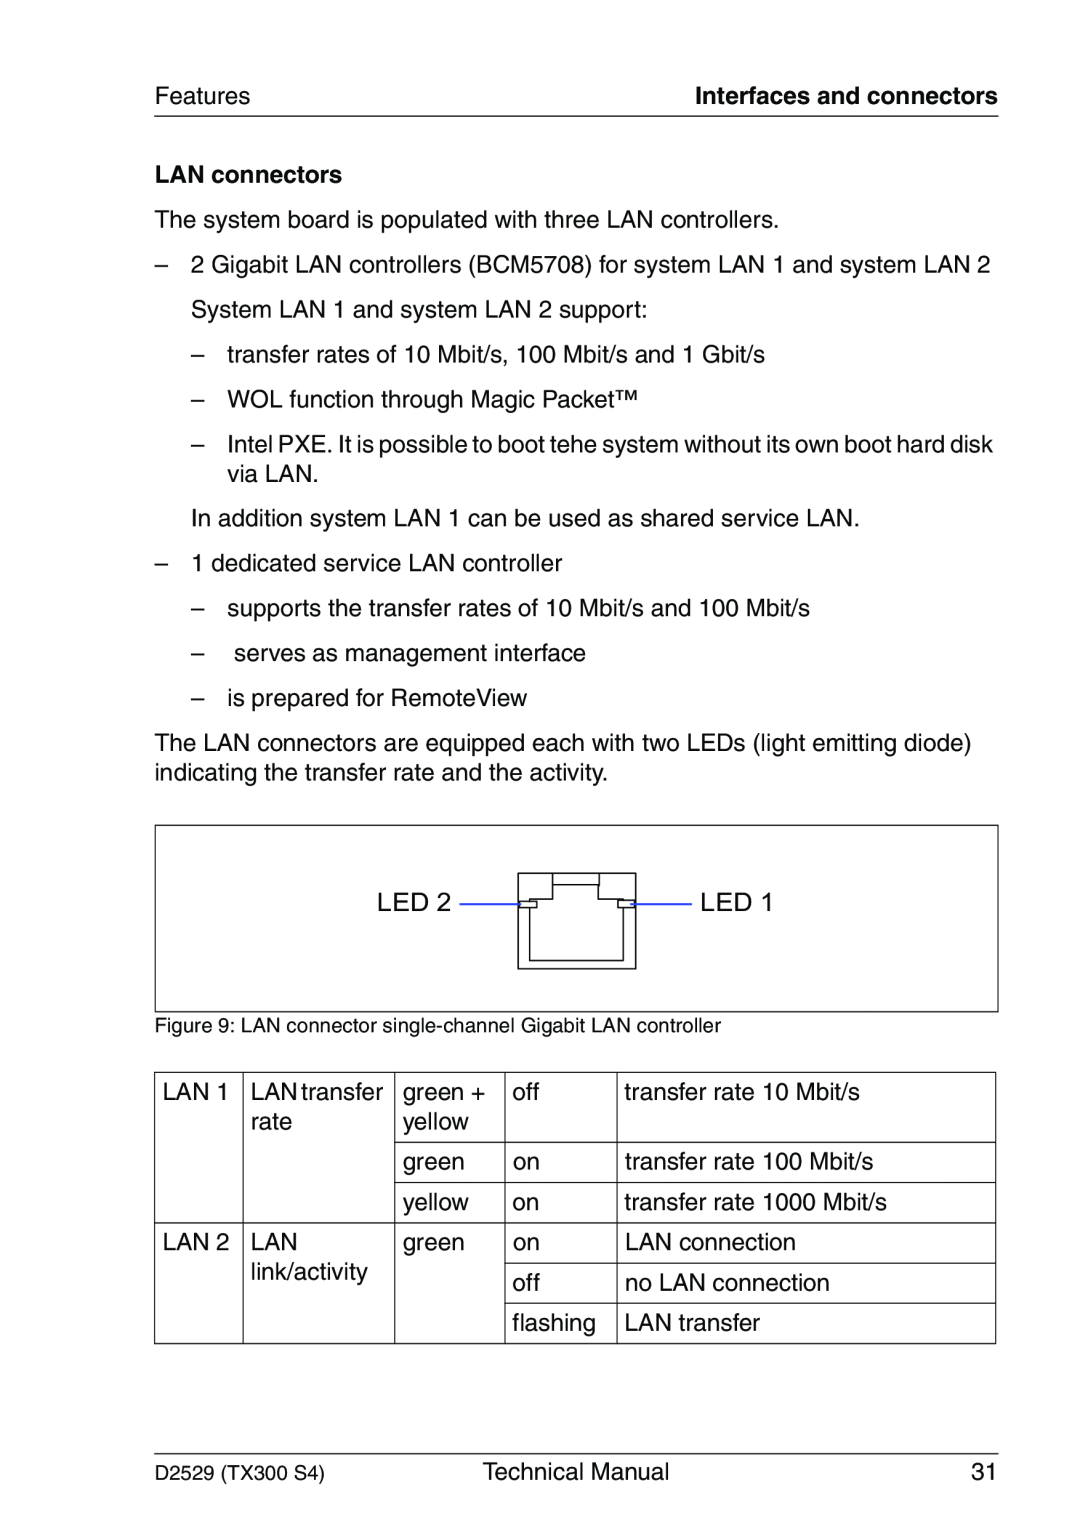 Fujitsu D2529 technical manual LAN connectors, Features 